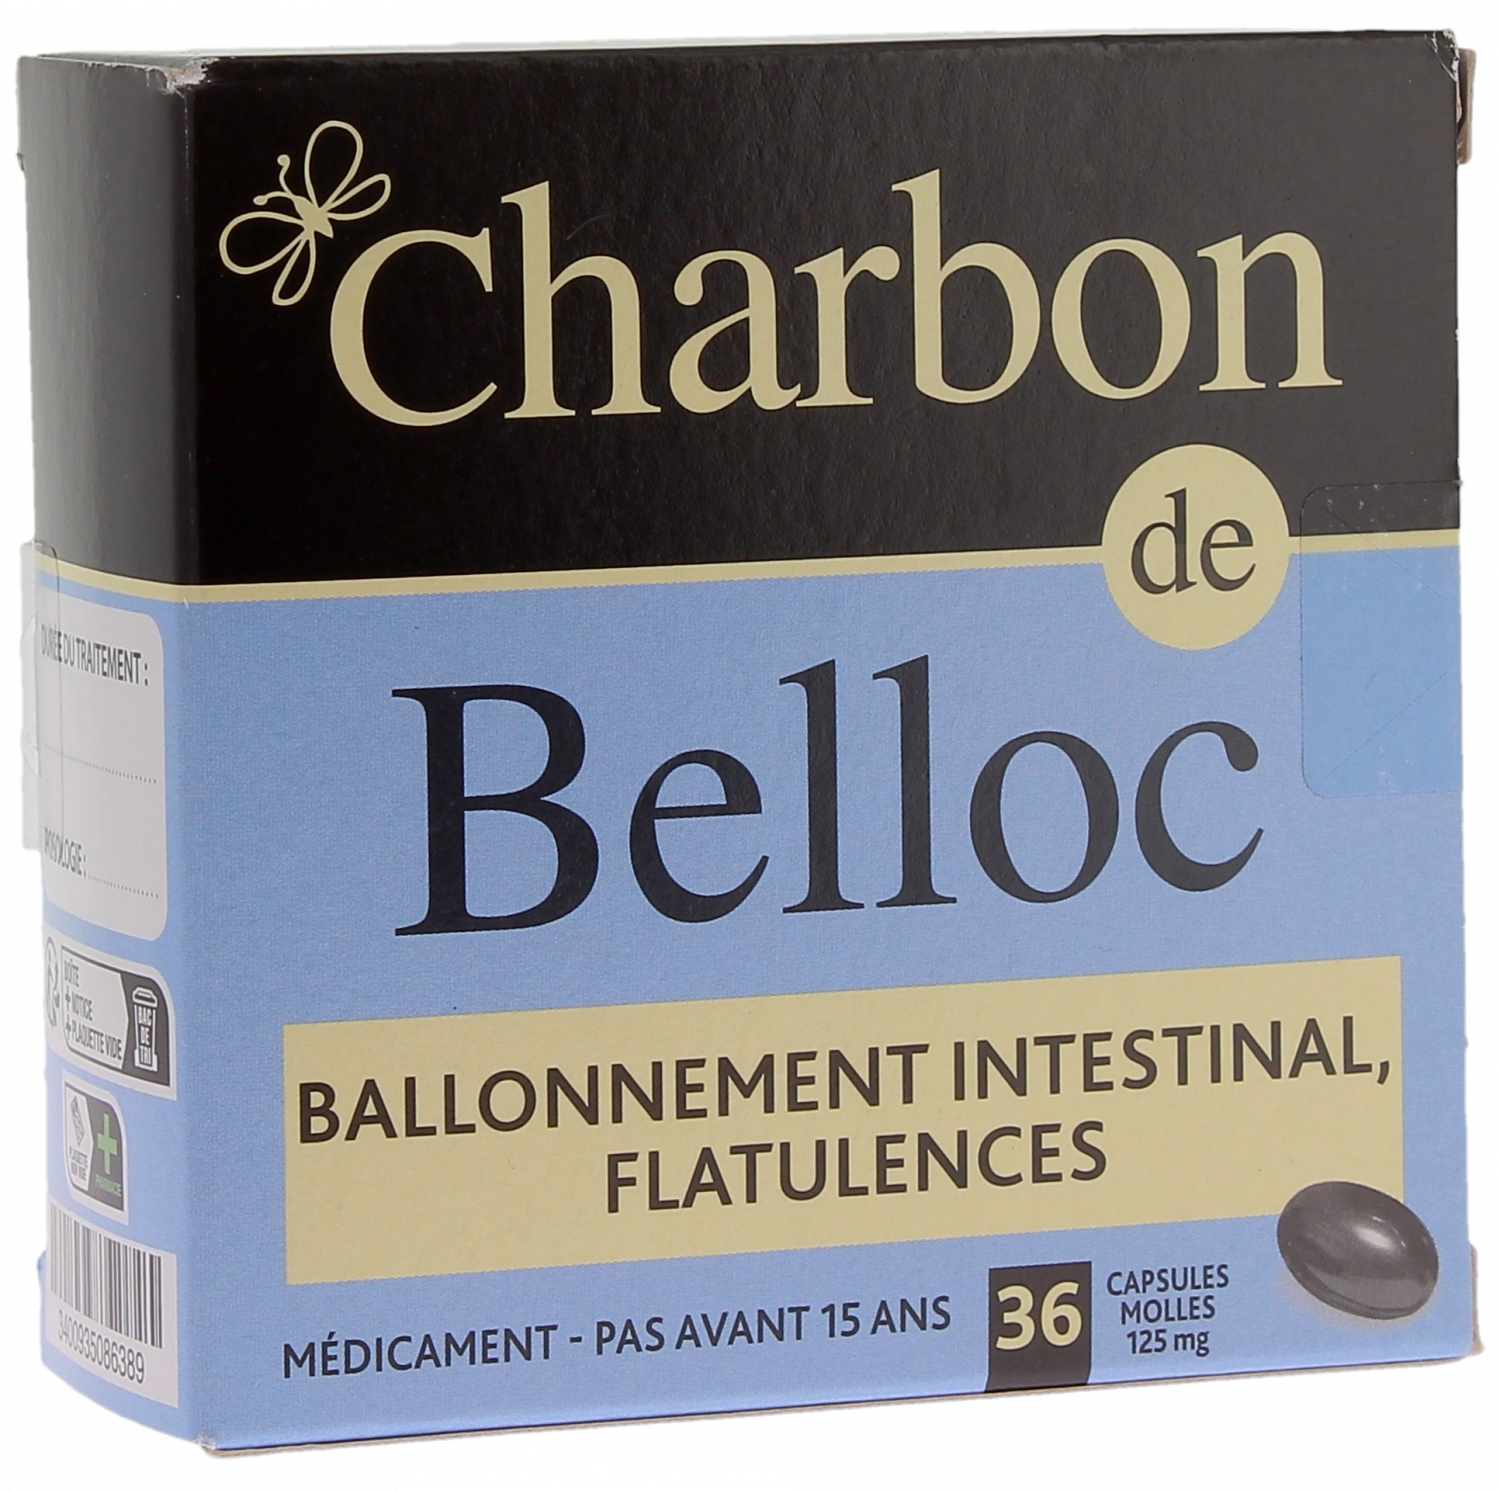 Charbon de belloc ballonnement intestinal flatulences - 36 ...